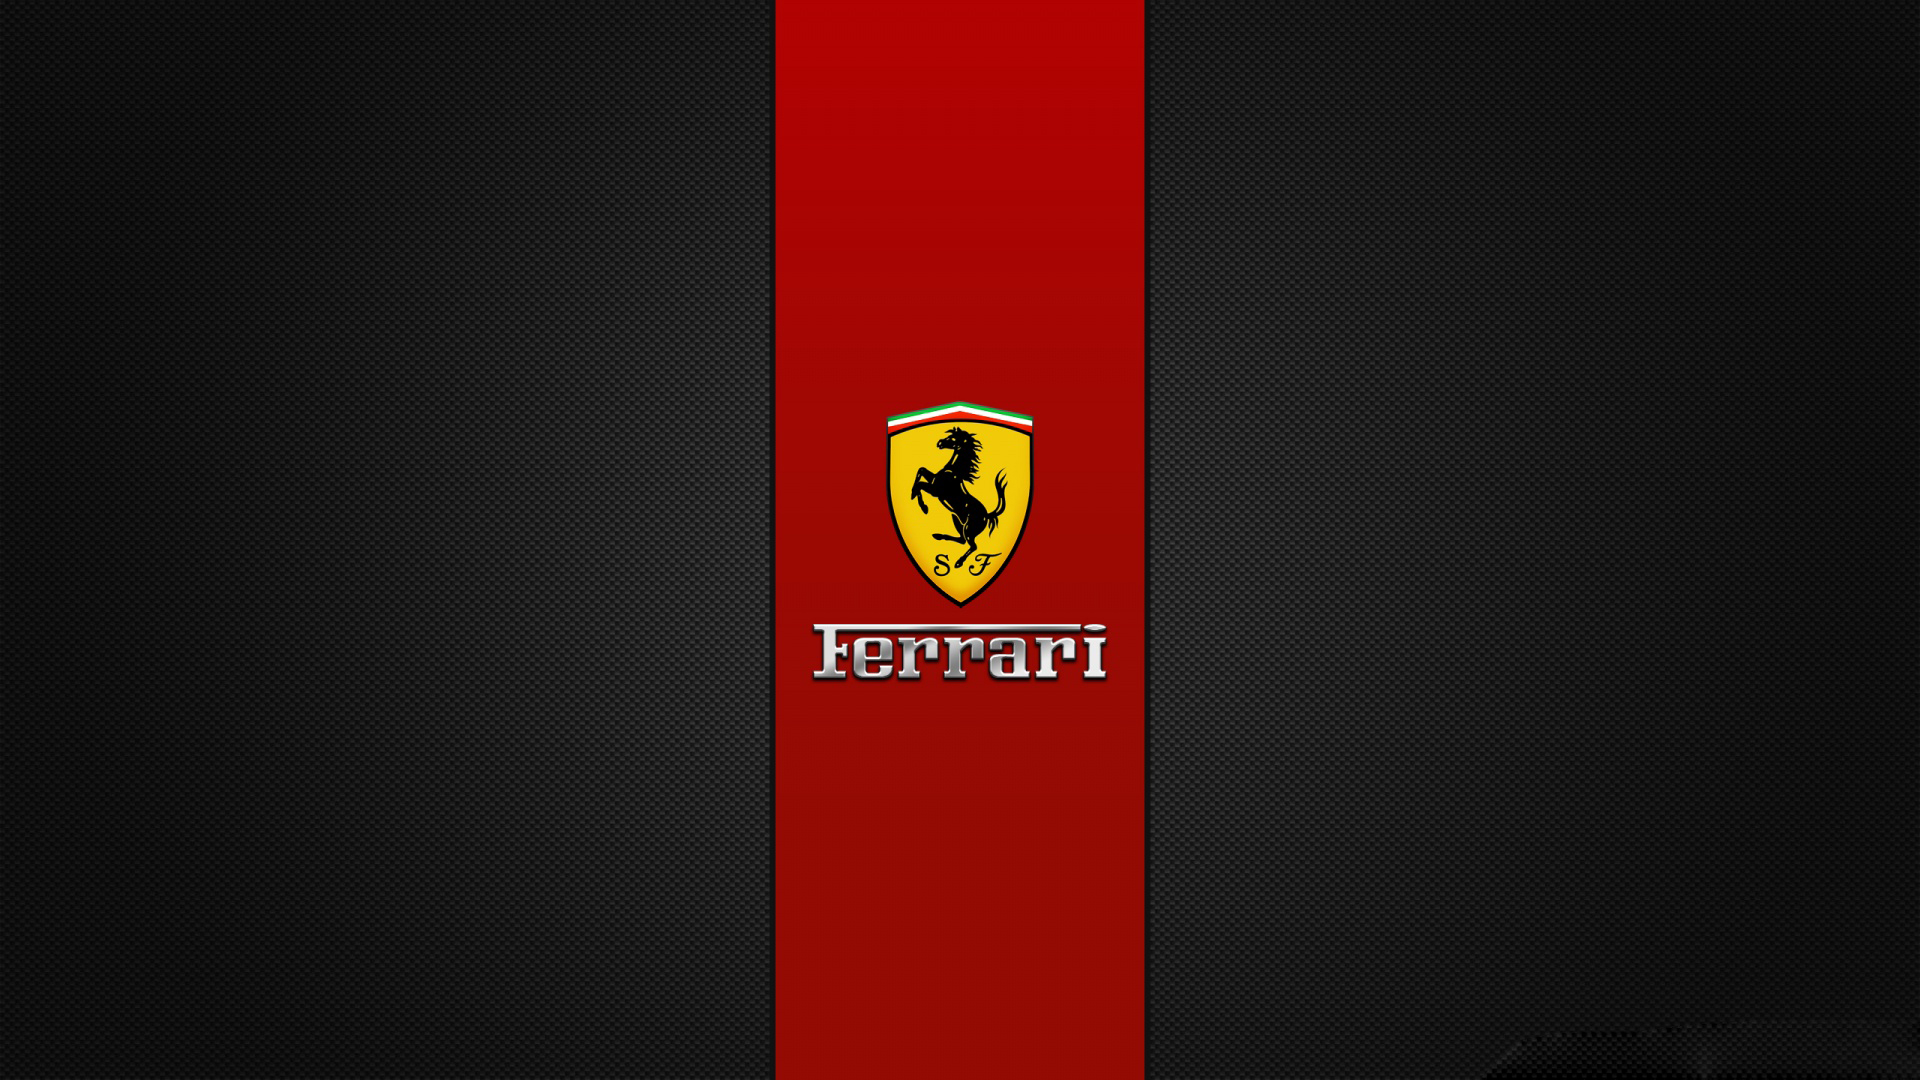 Ferrari Logo This Wallpapers - Riset